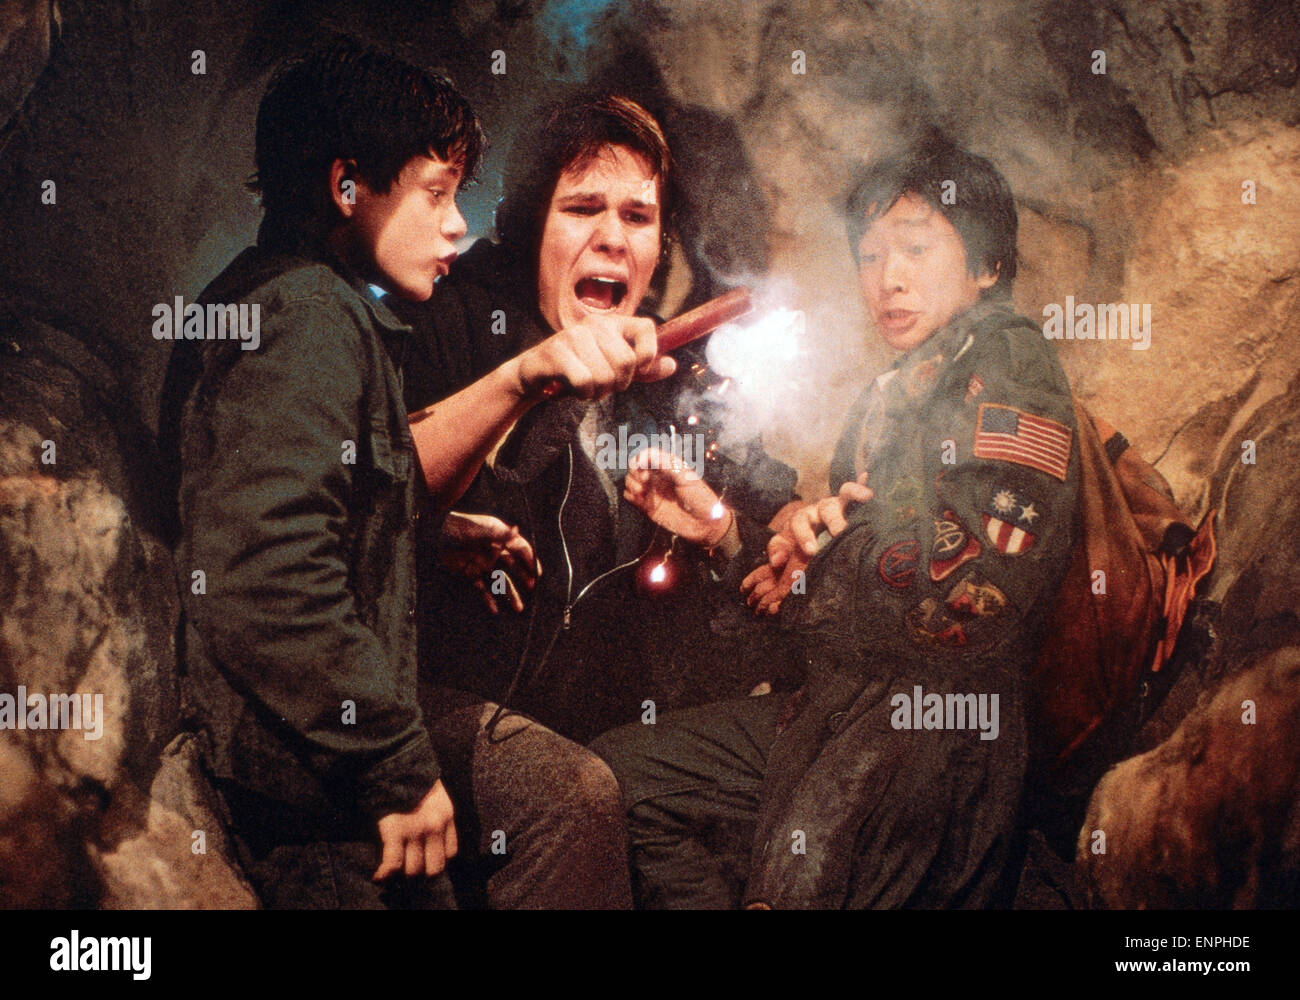 Les Goonies, aka : The Goonies, USA 1985, Regie : Richard Donner, acteurs : Sean Astin, Josh Brolin, Ke Huy Quan Banque D'Images